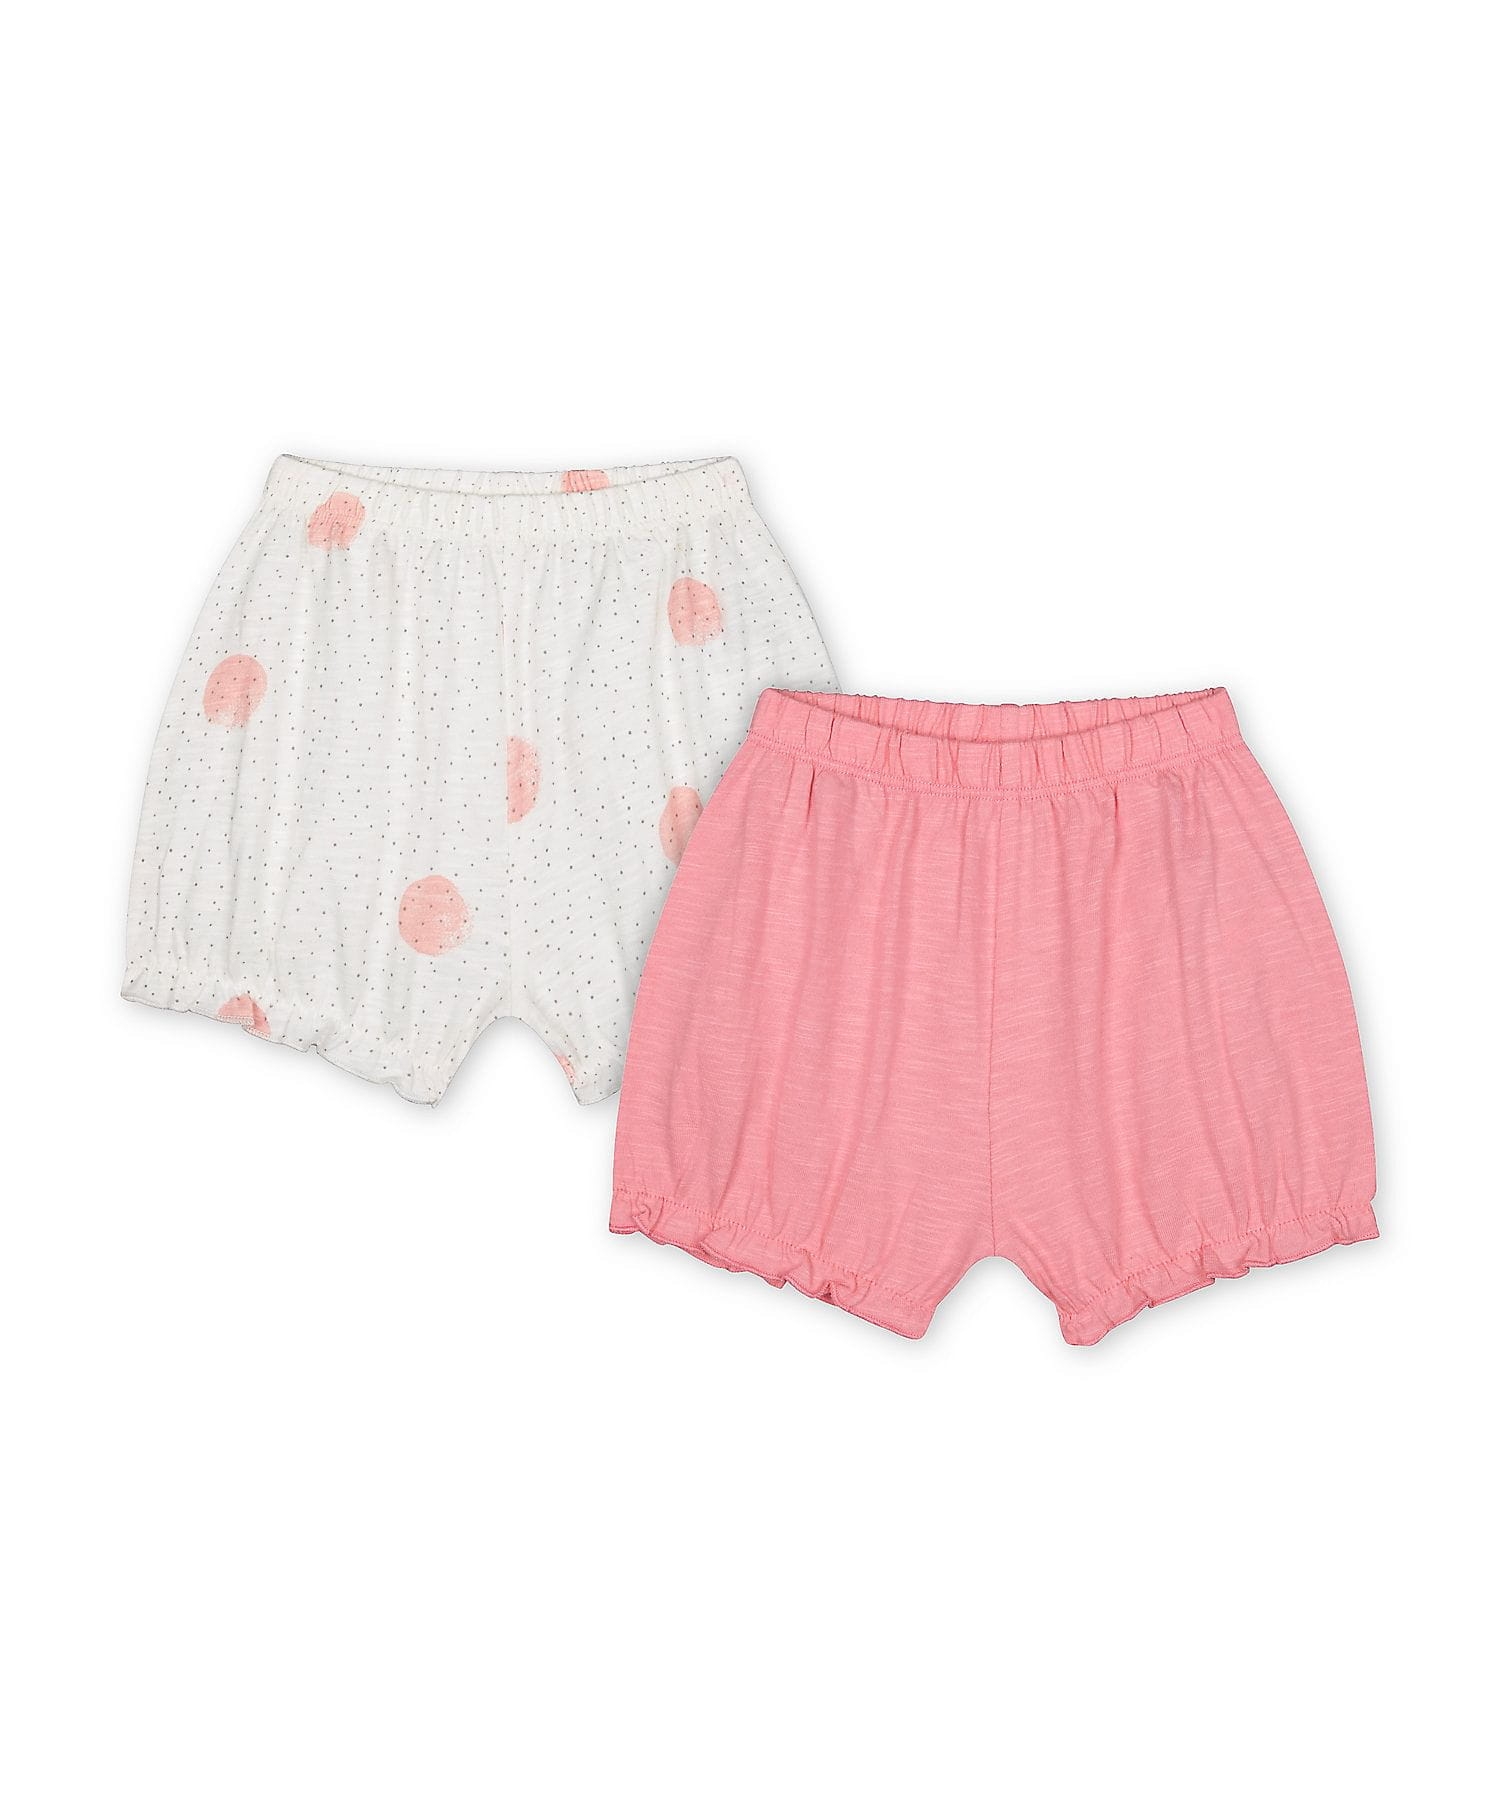 Mothercare | Girls Shorts Polka Dot Print - Pack Of 2 - Pink Cream 0